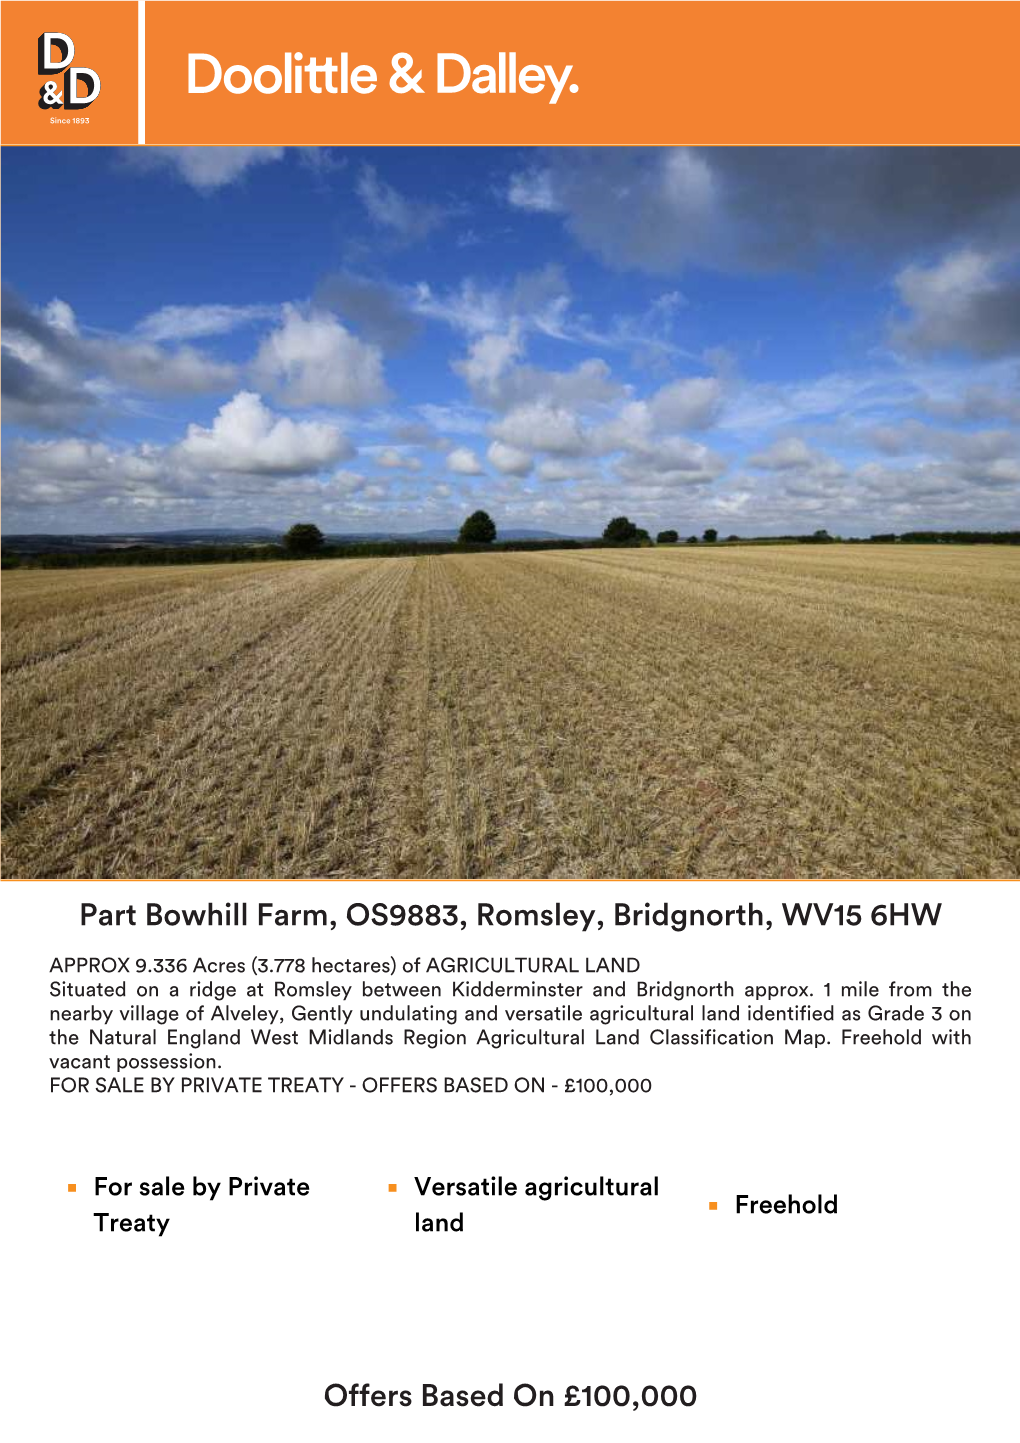 Part Bowhill Farm, OS9883, Romsley, Bridgnorth, WV15 6HW Offers